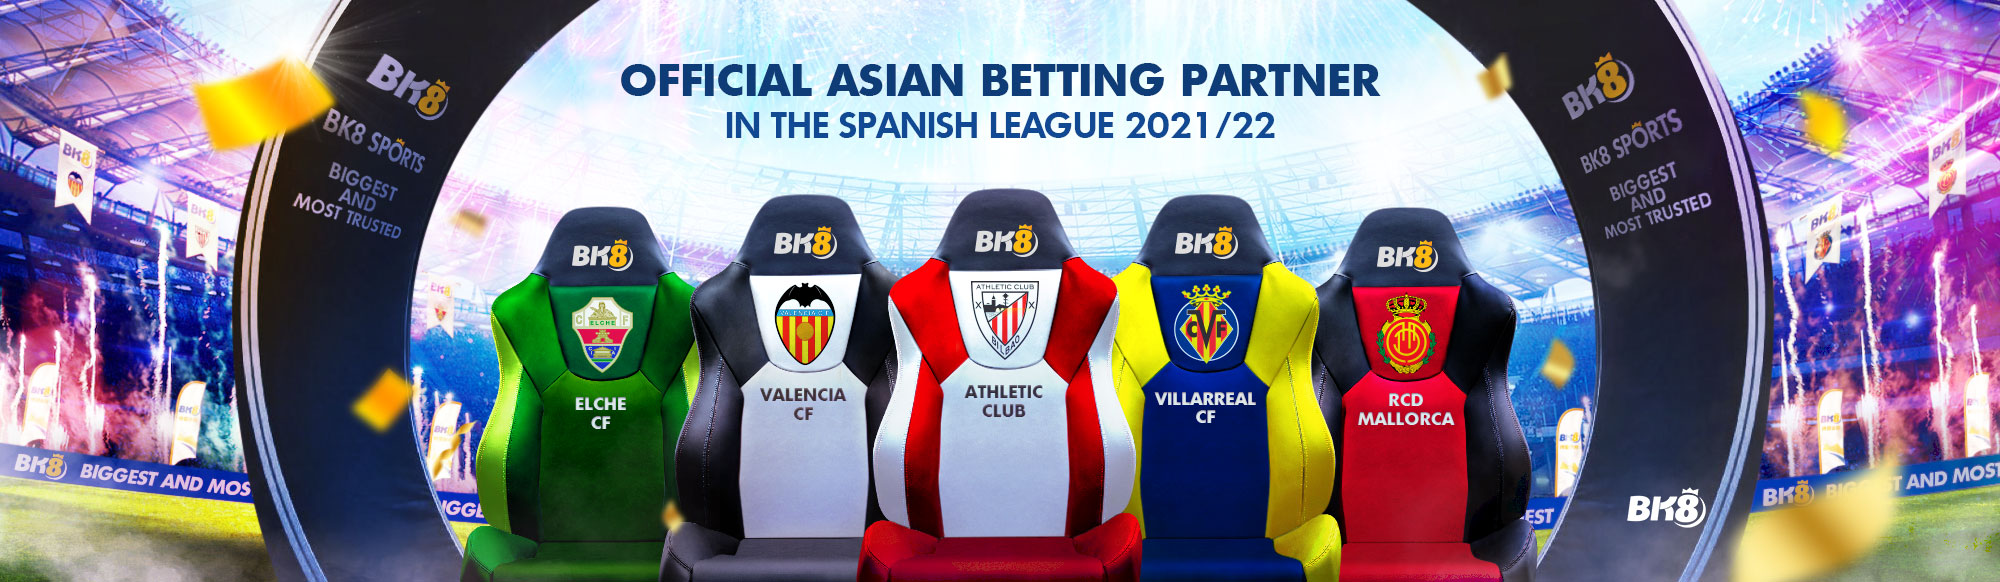 5 Spanish Football League Clubs Announce BK8 as Official Asian Betting Partner